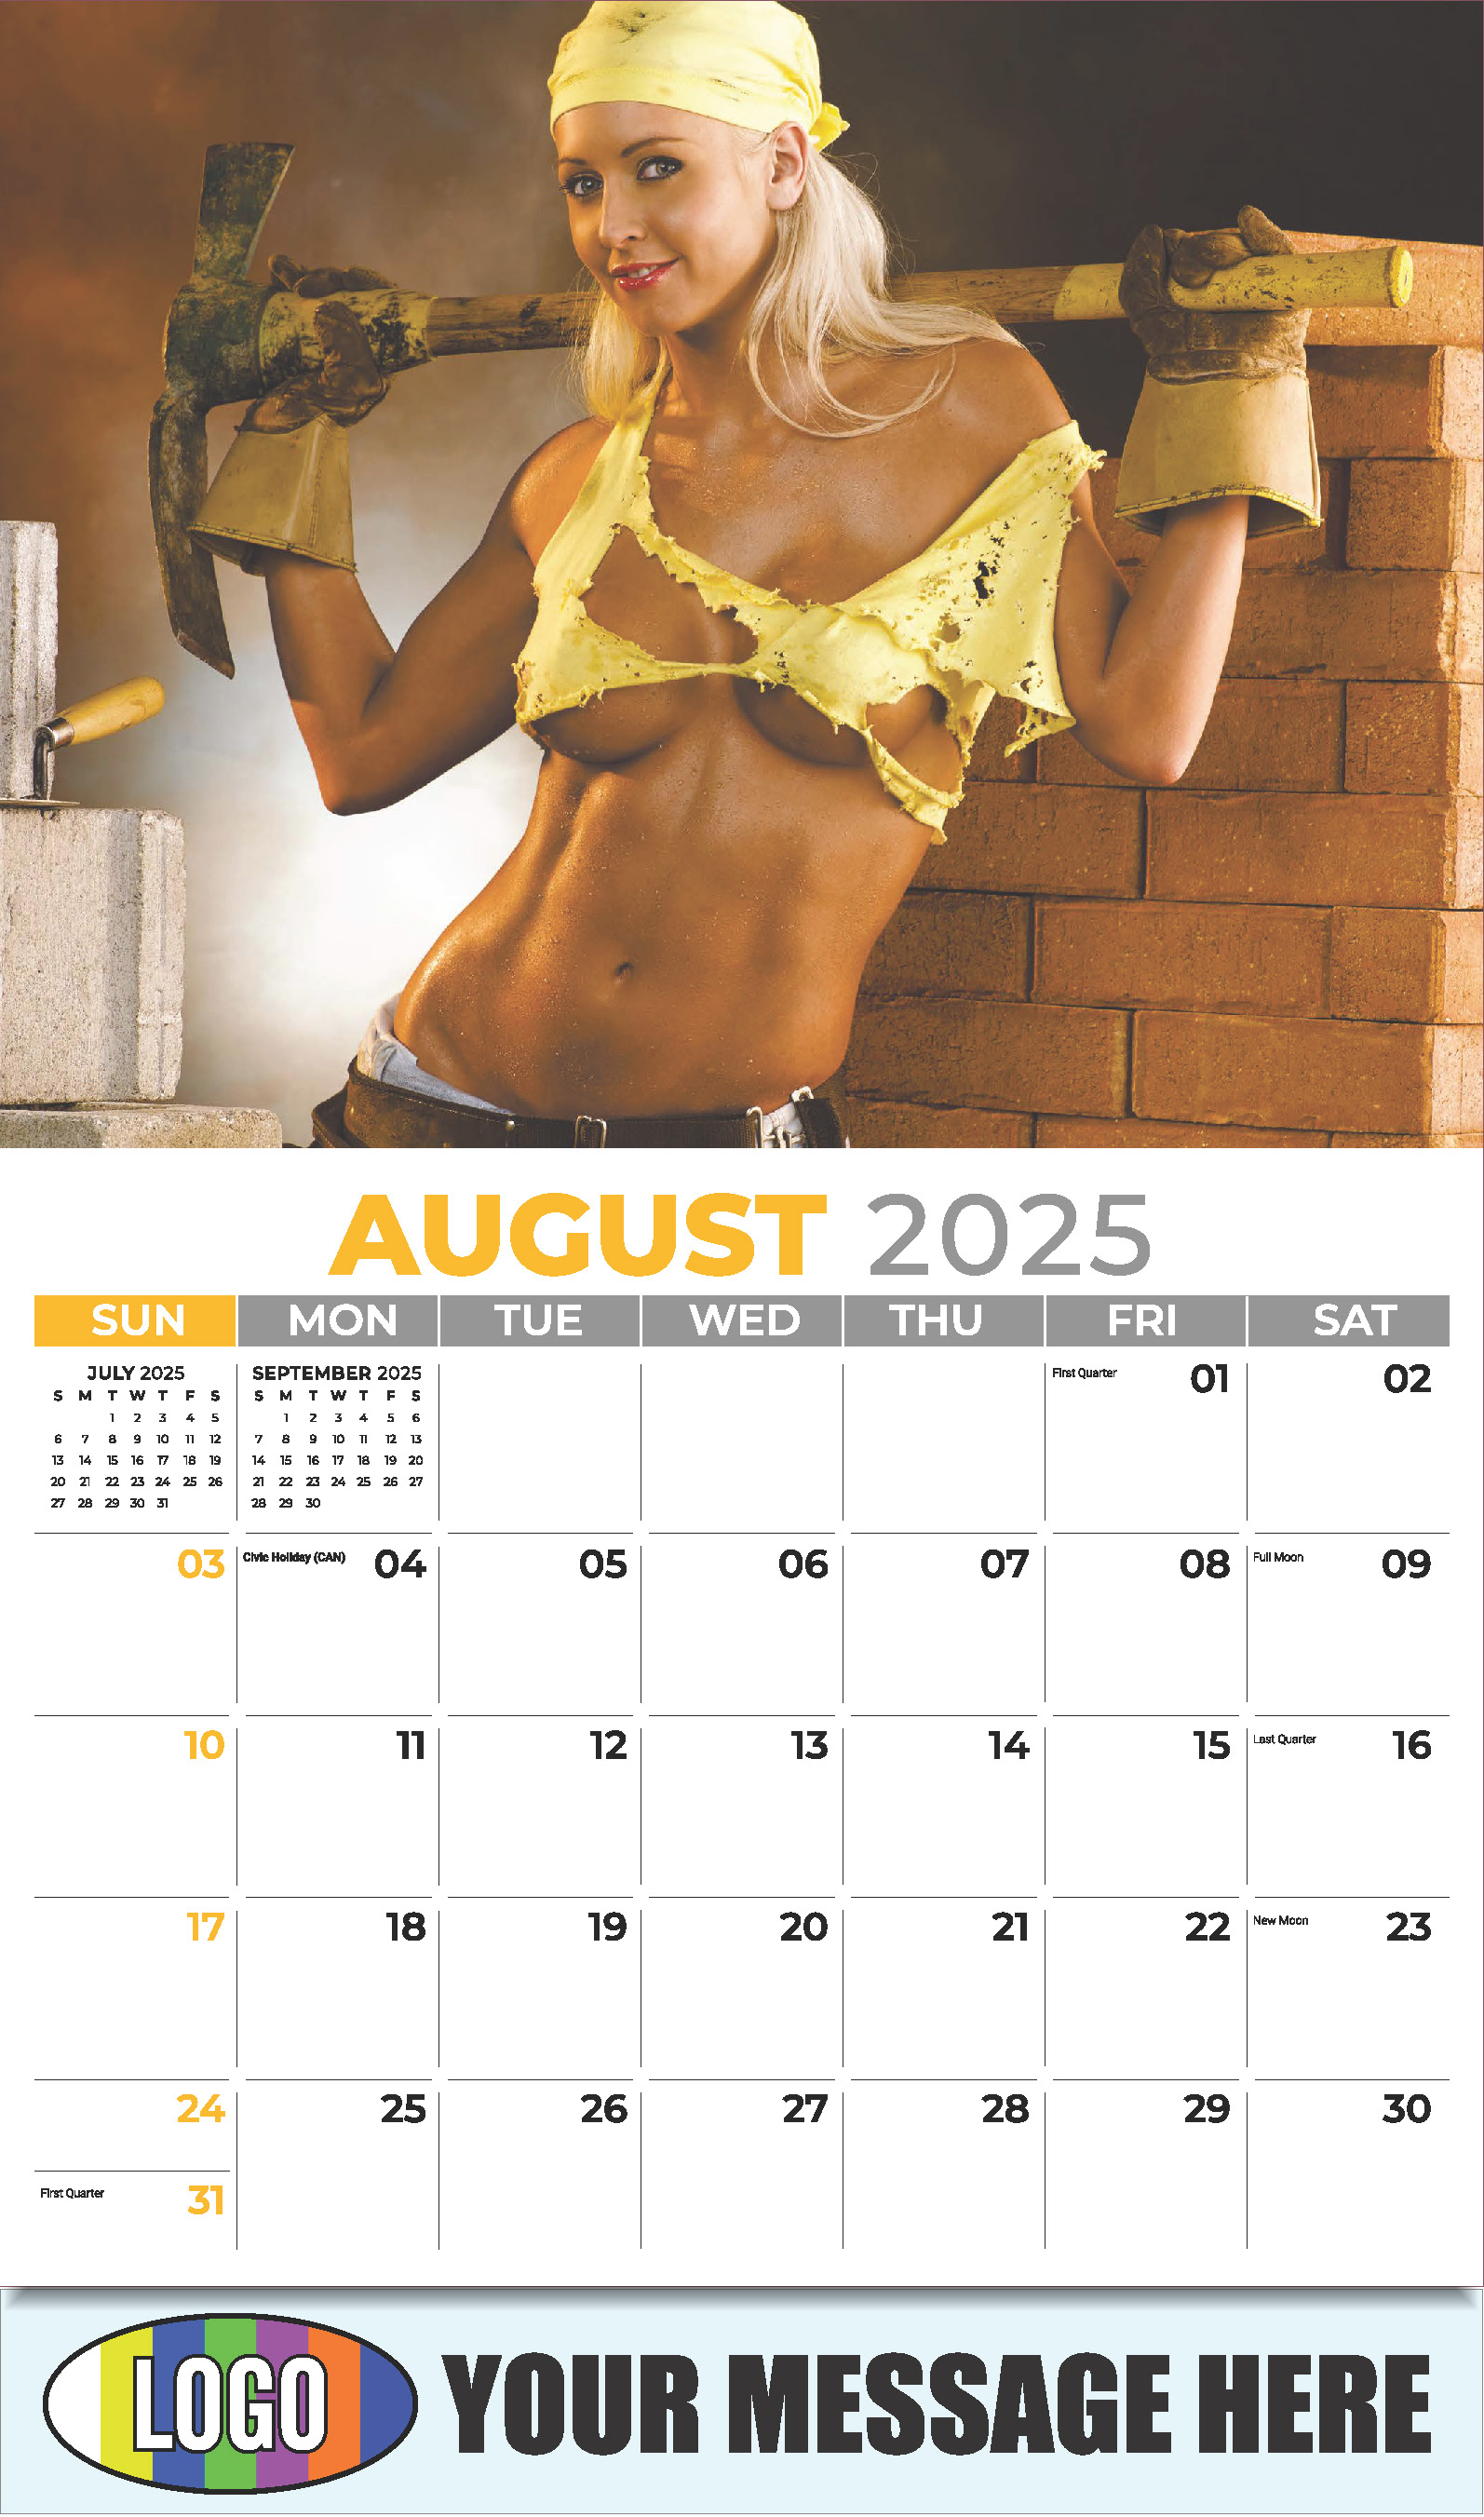 Building Bades 2025 Business Promotional Calendar - August